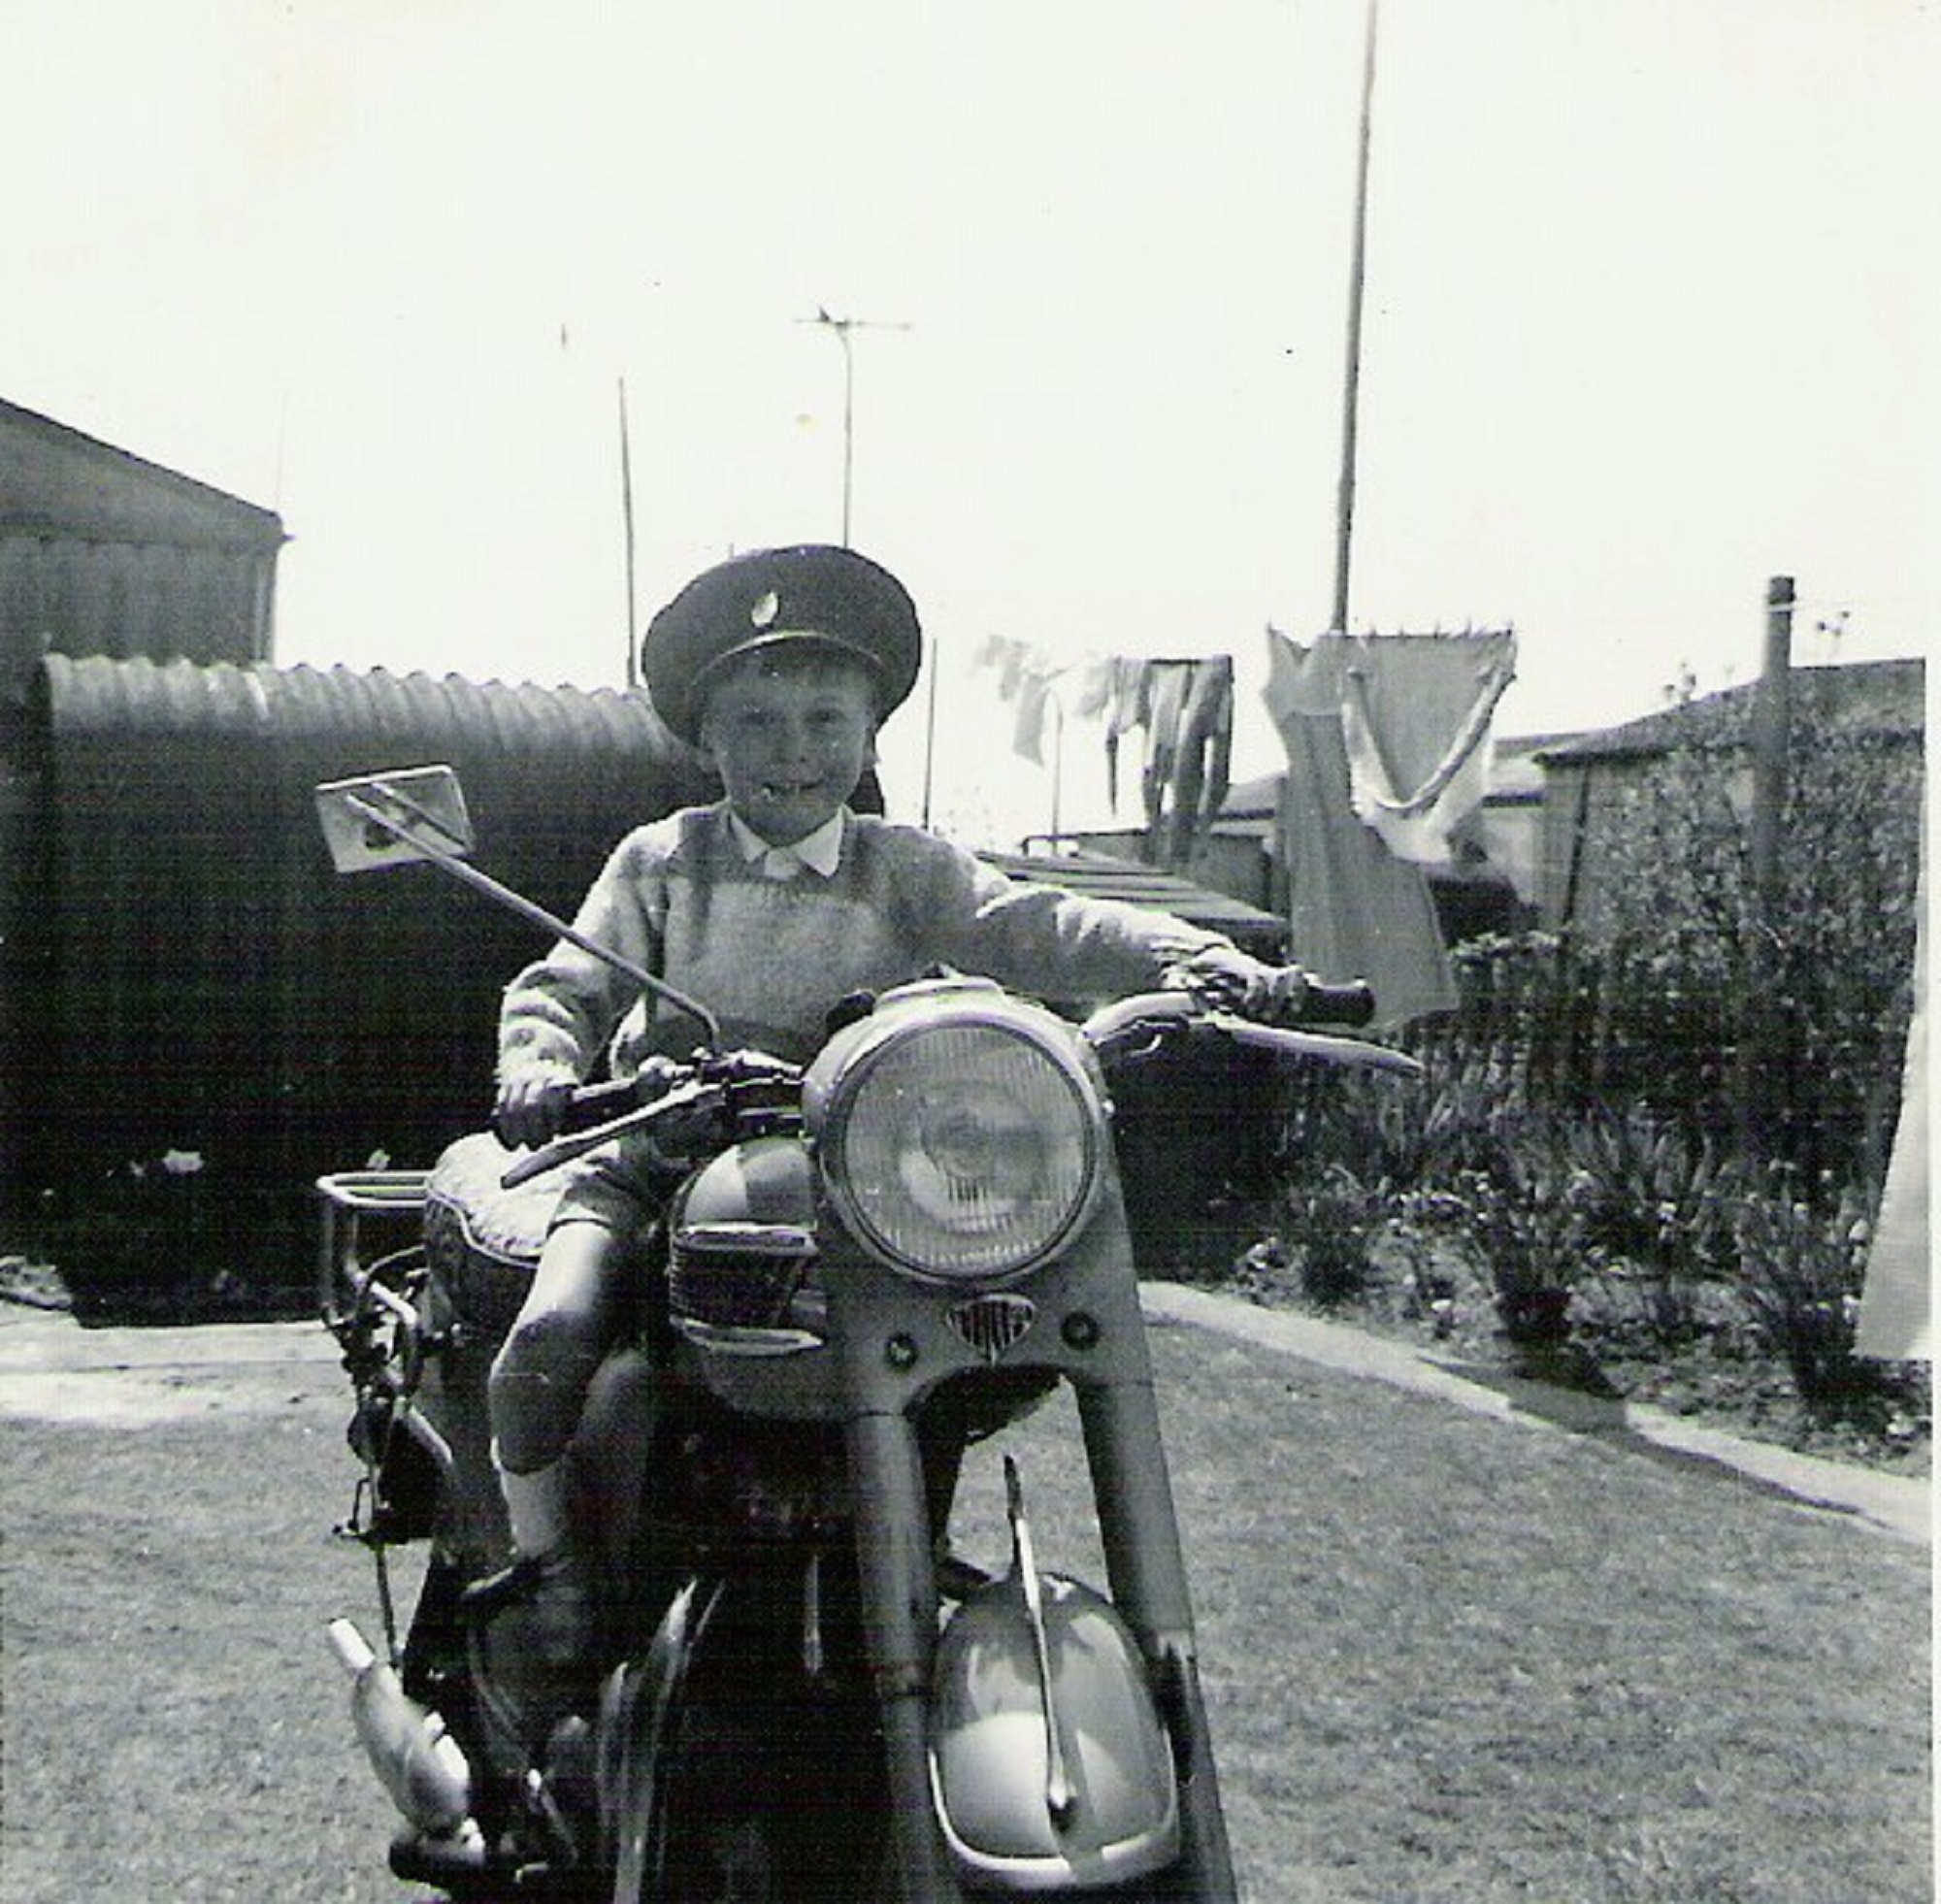 Graham on a motorbike, 849 Ripple Road